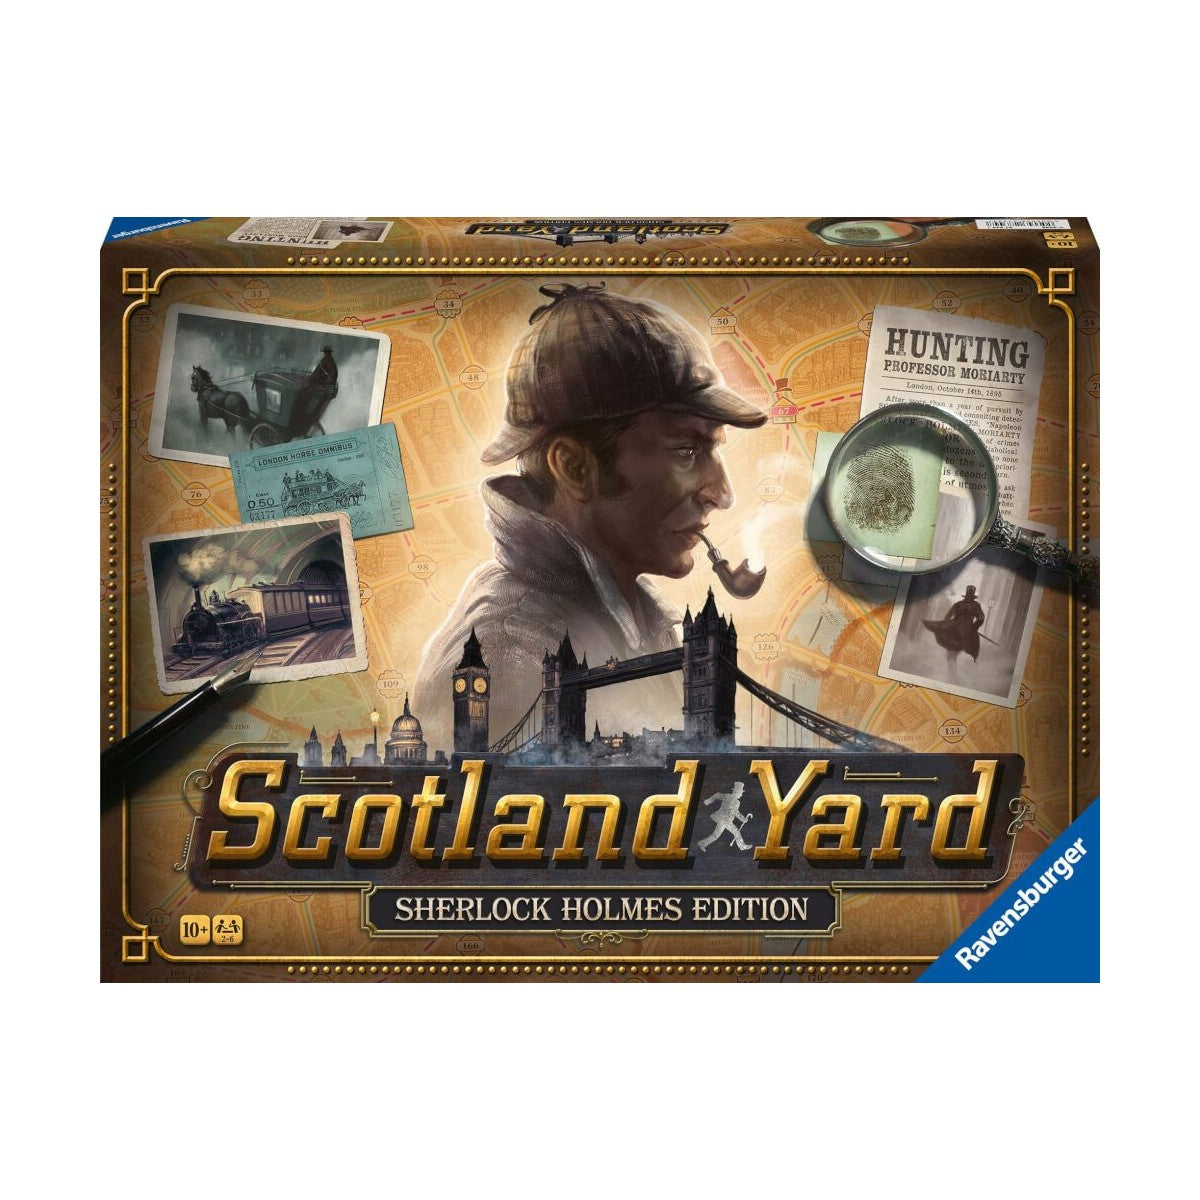 (BSG Certified USED) Scotland Yard: Sherlock Holmes